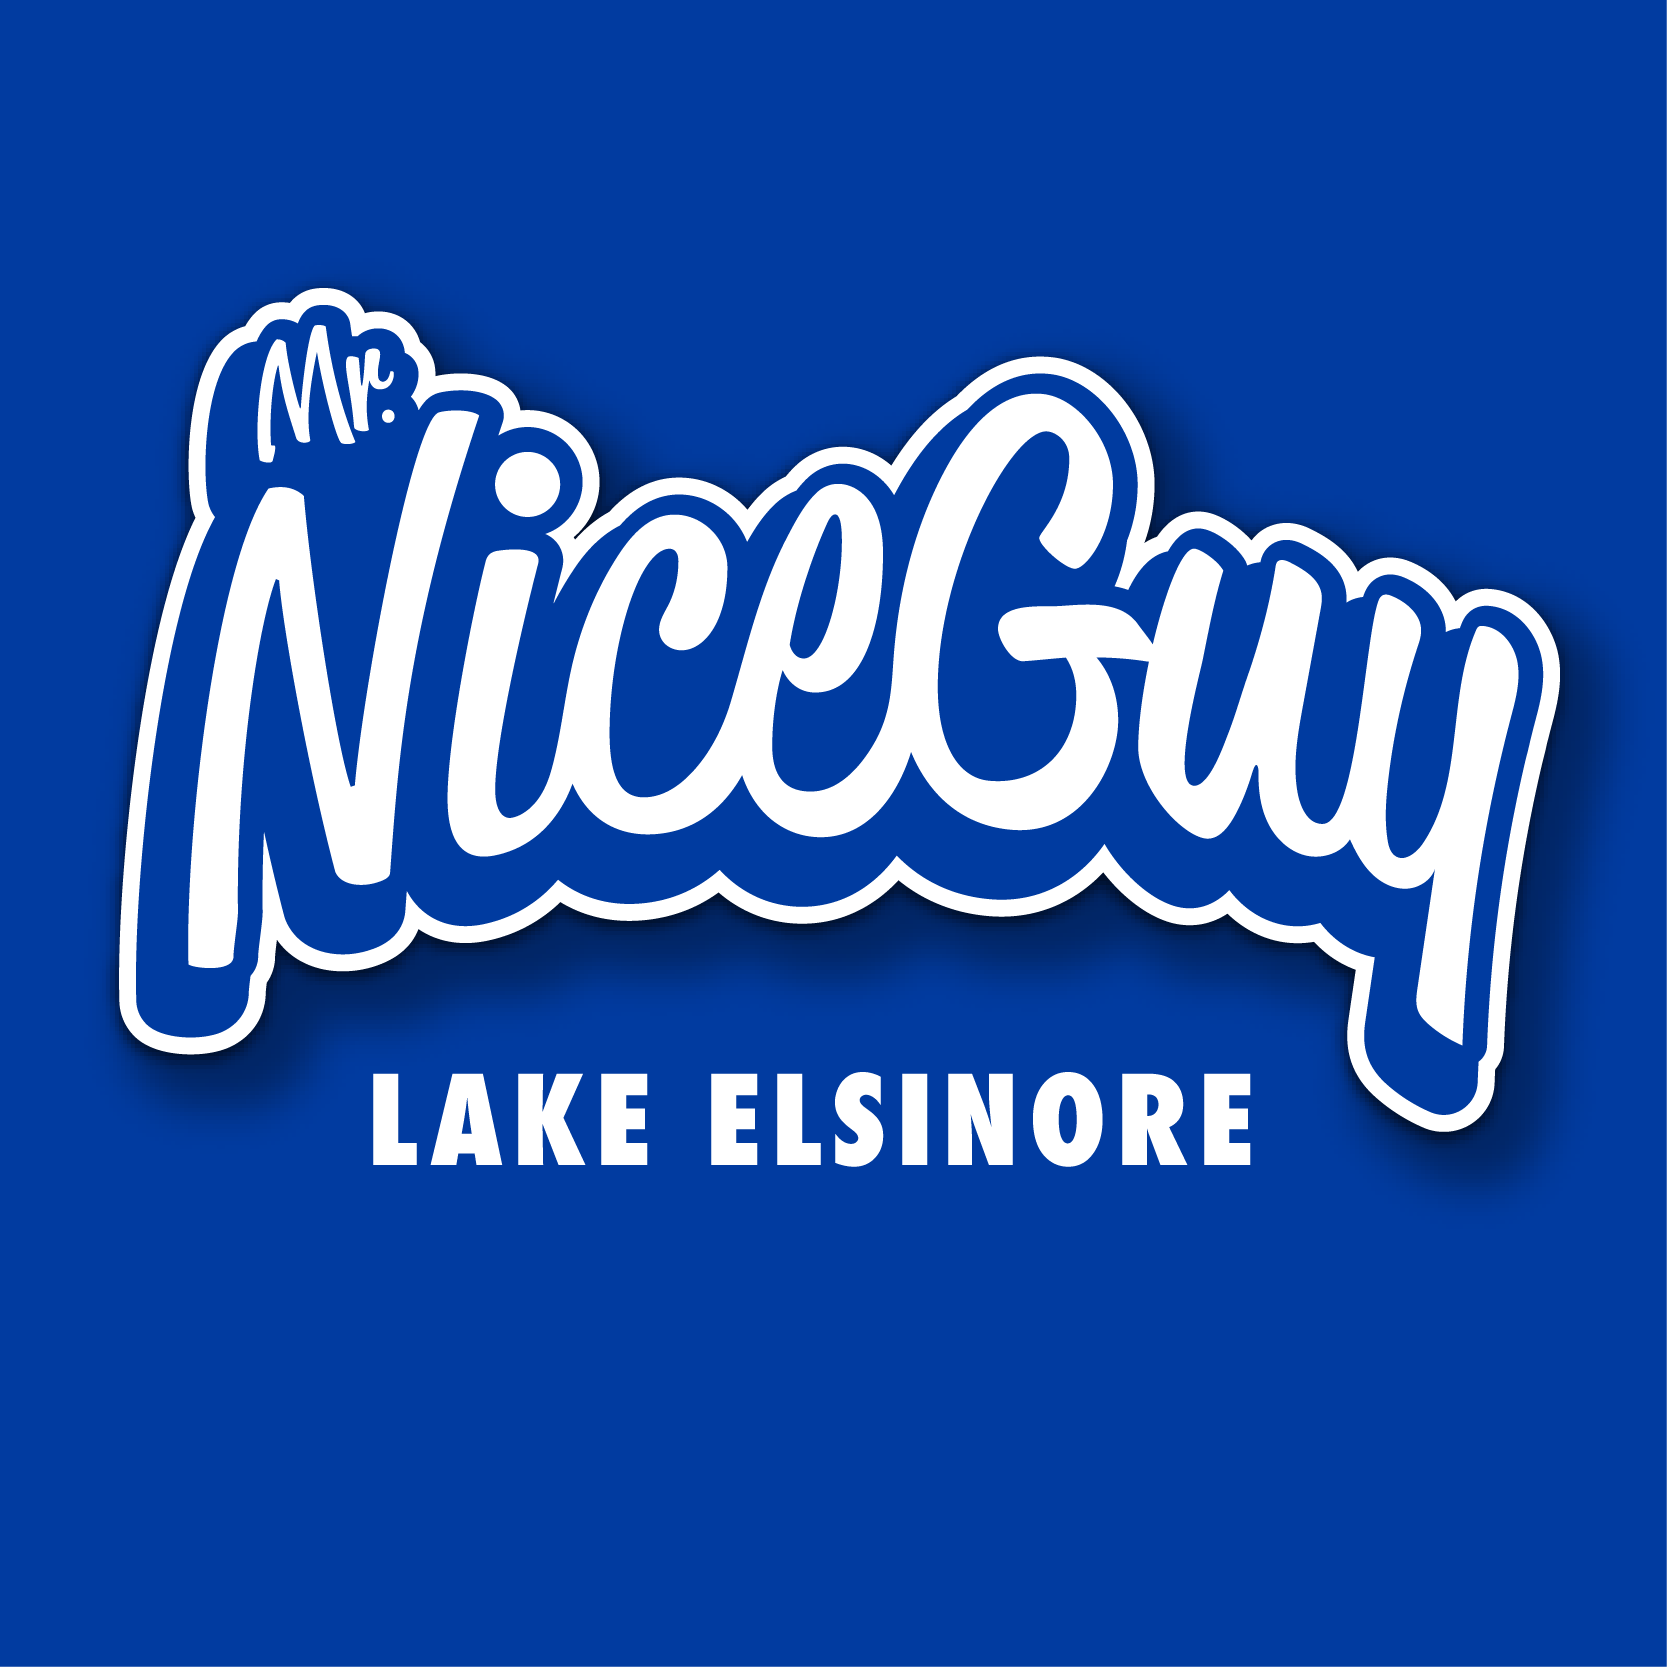 Mr. Nice Guy - Lake Elsinore Marijuana Dispensary